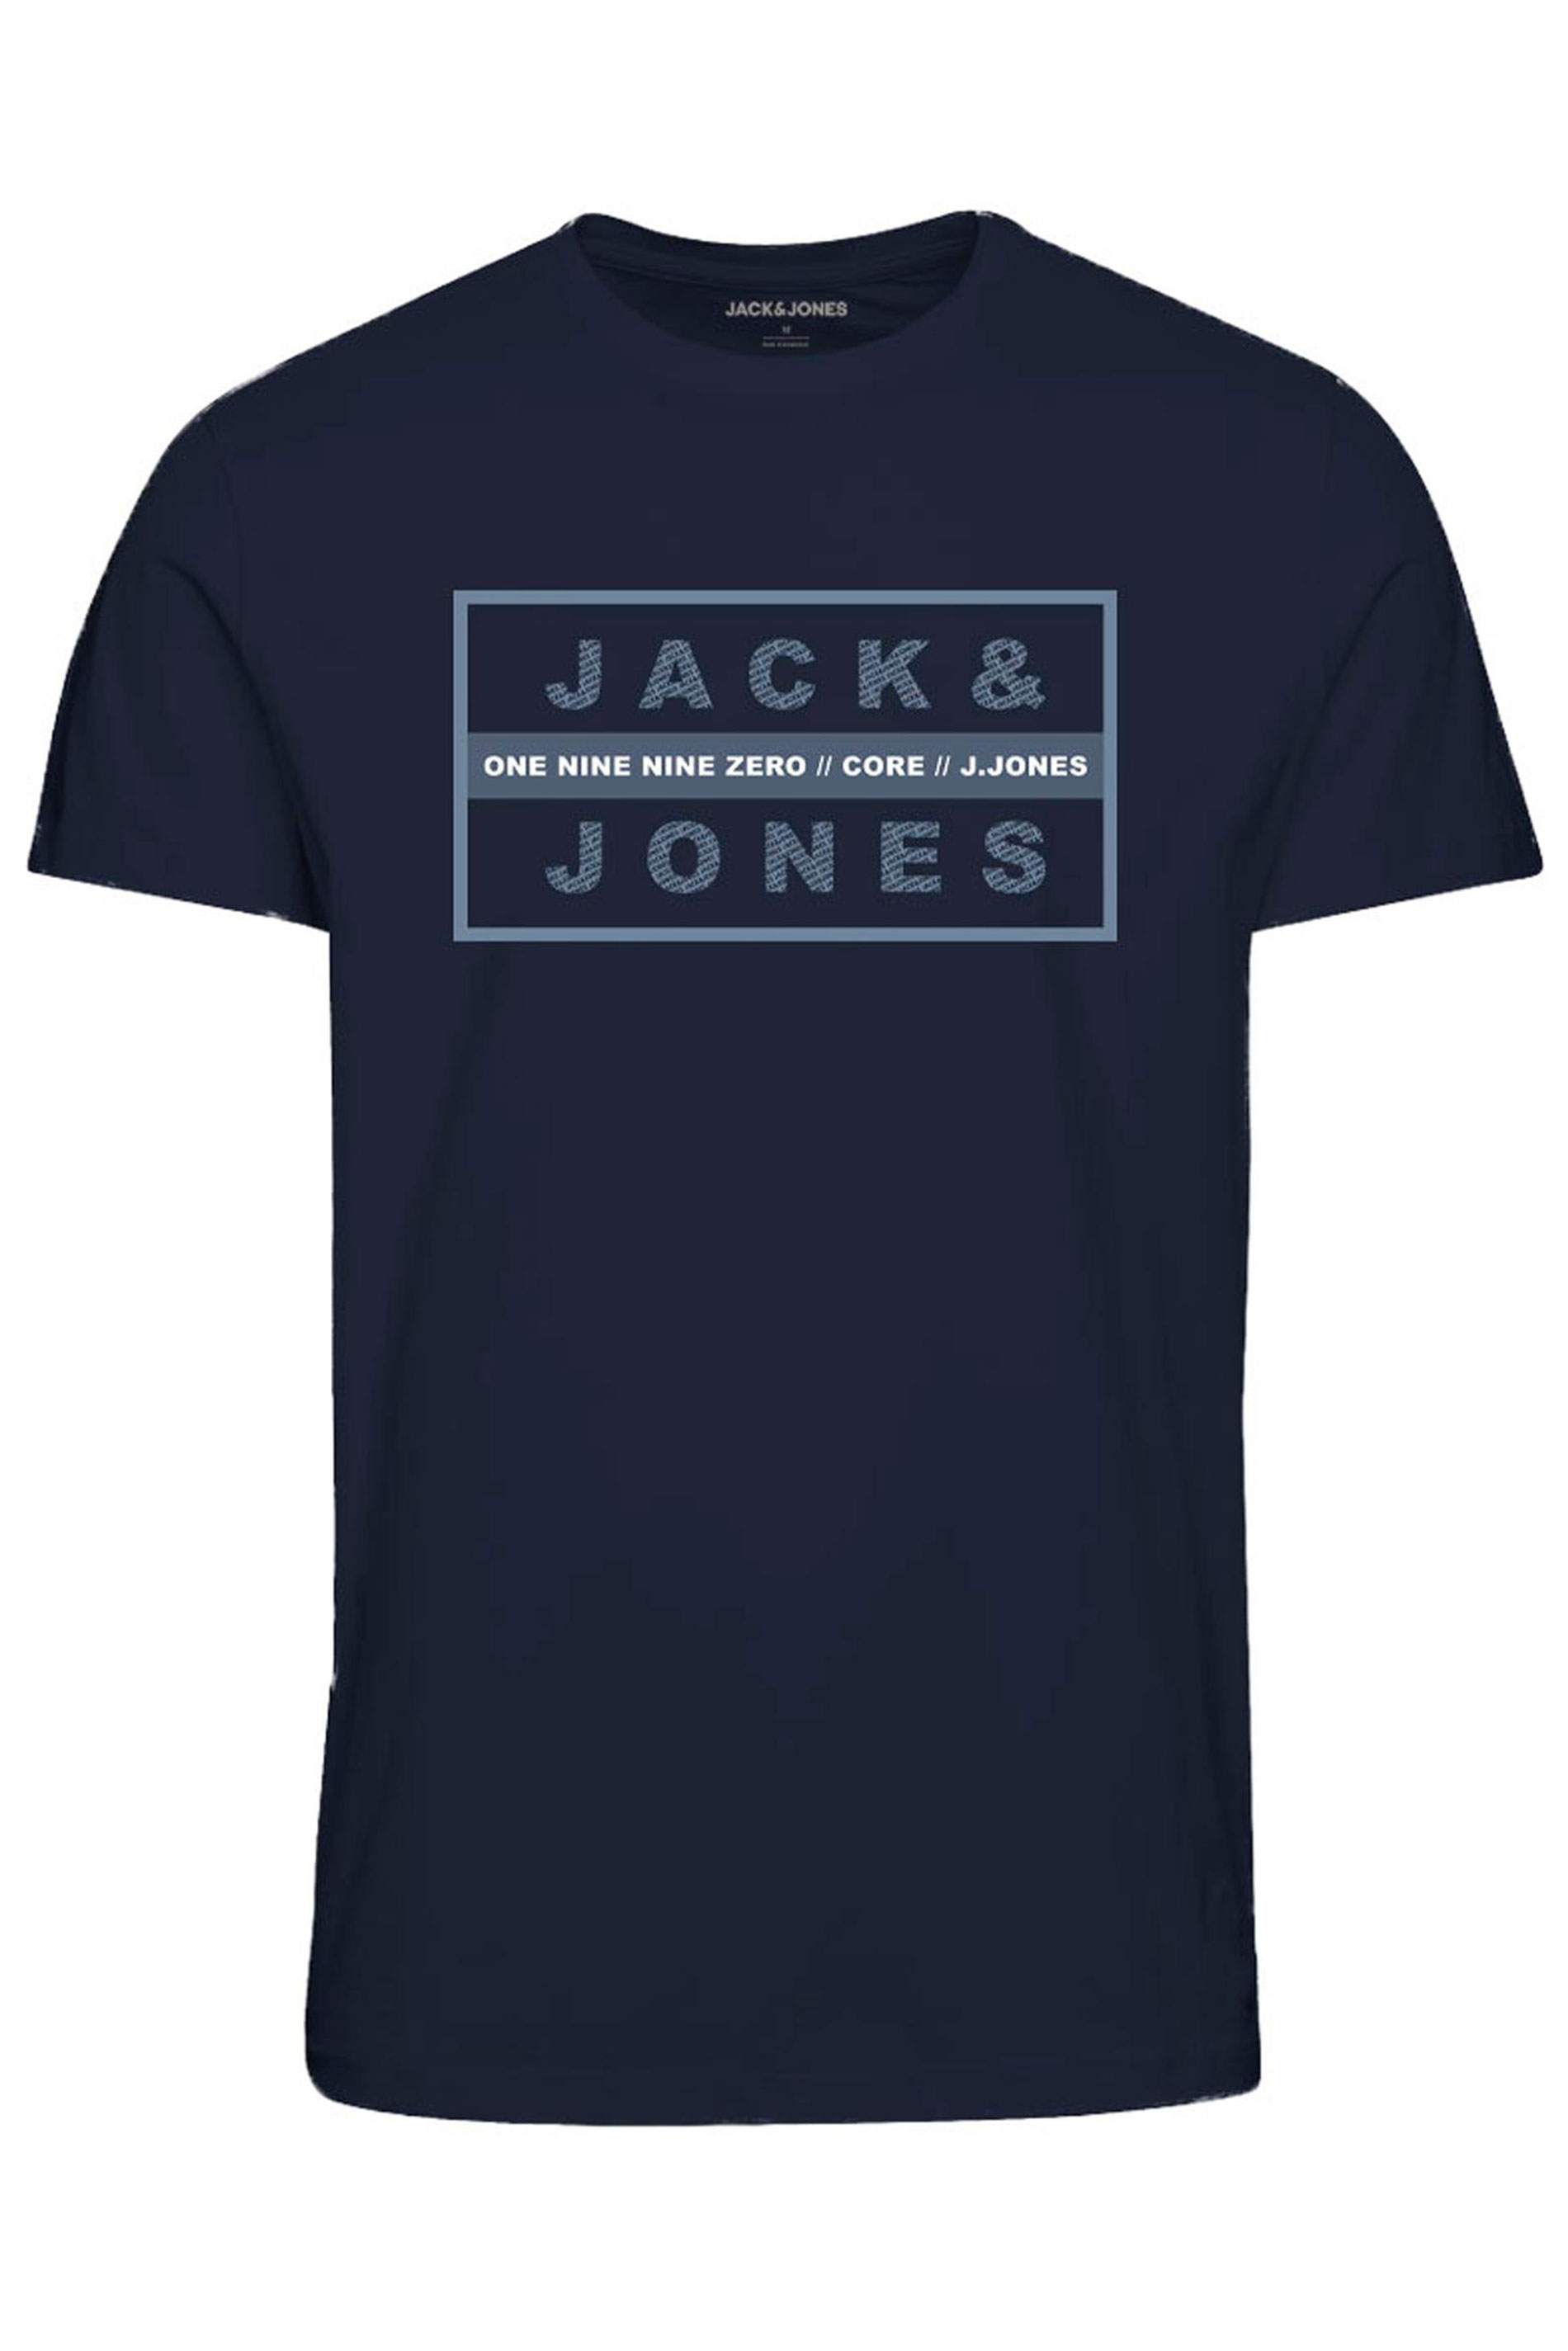 JACK & JONES Big & Tall Navy Blue Box Logo T-Shirt | BadRhino 2